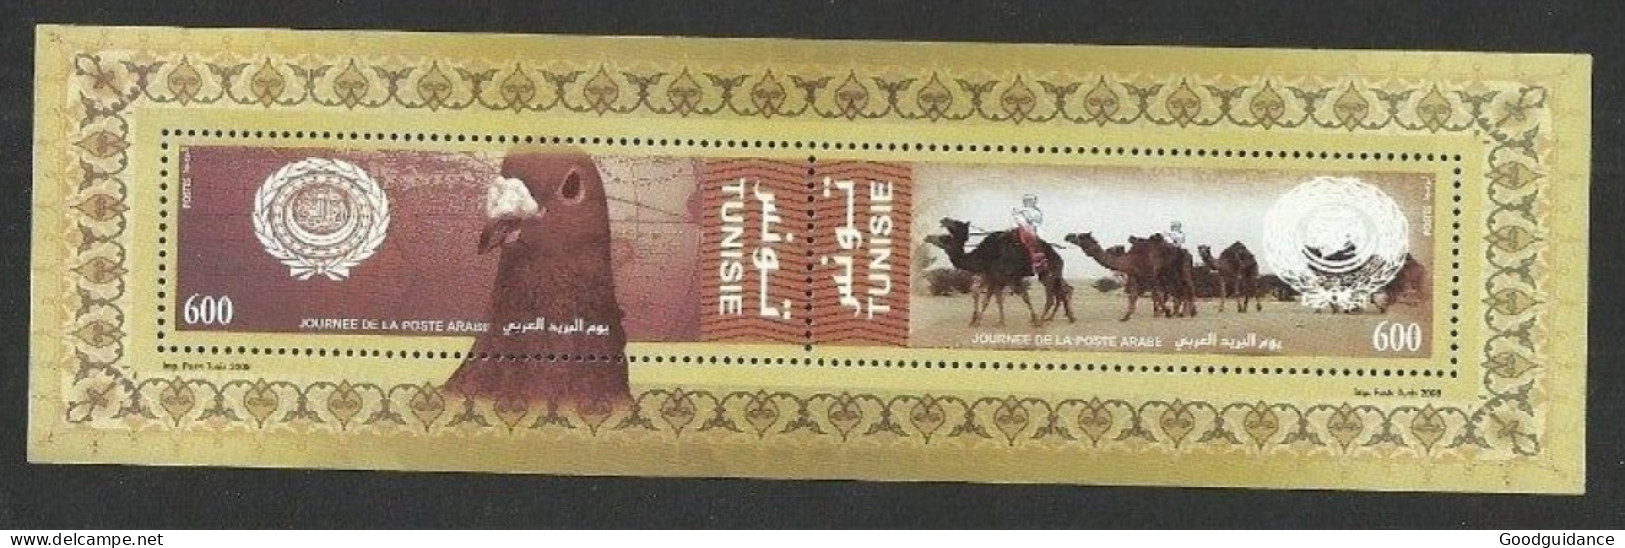 2008- Tunisia-  Minisheet  - Arab Post Day 2008 - Joint Issue - Bird - Camel - Desert - MNH** - Jordanien